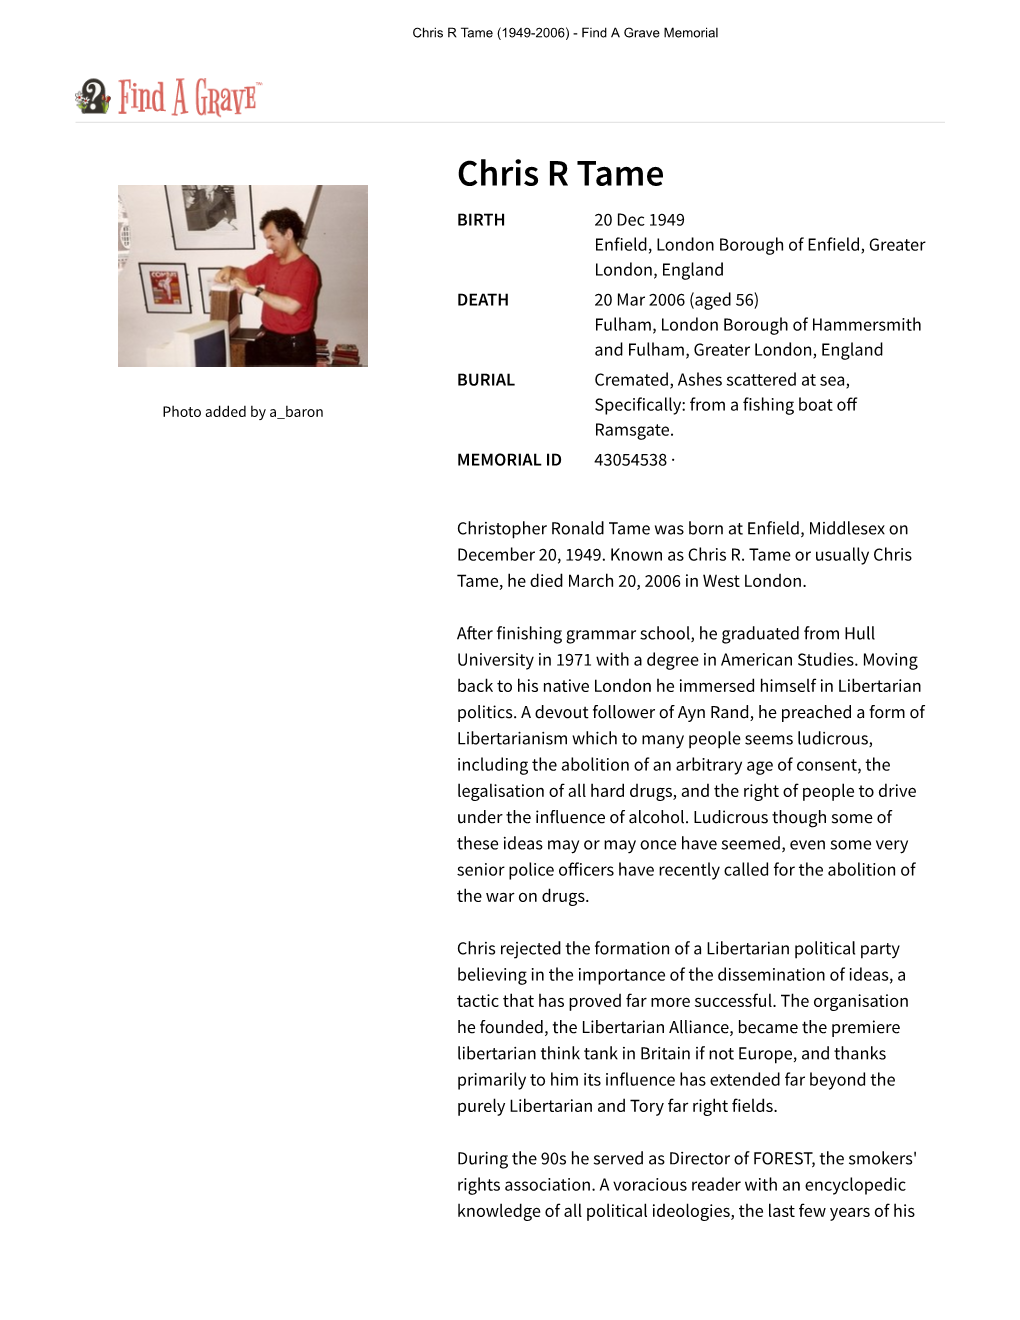 Chris R Tame (1949-2006) - Find a Grave Memorial